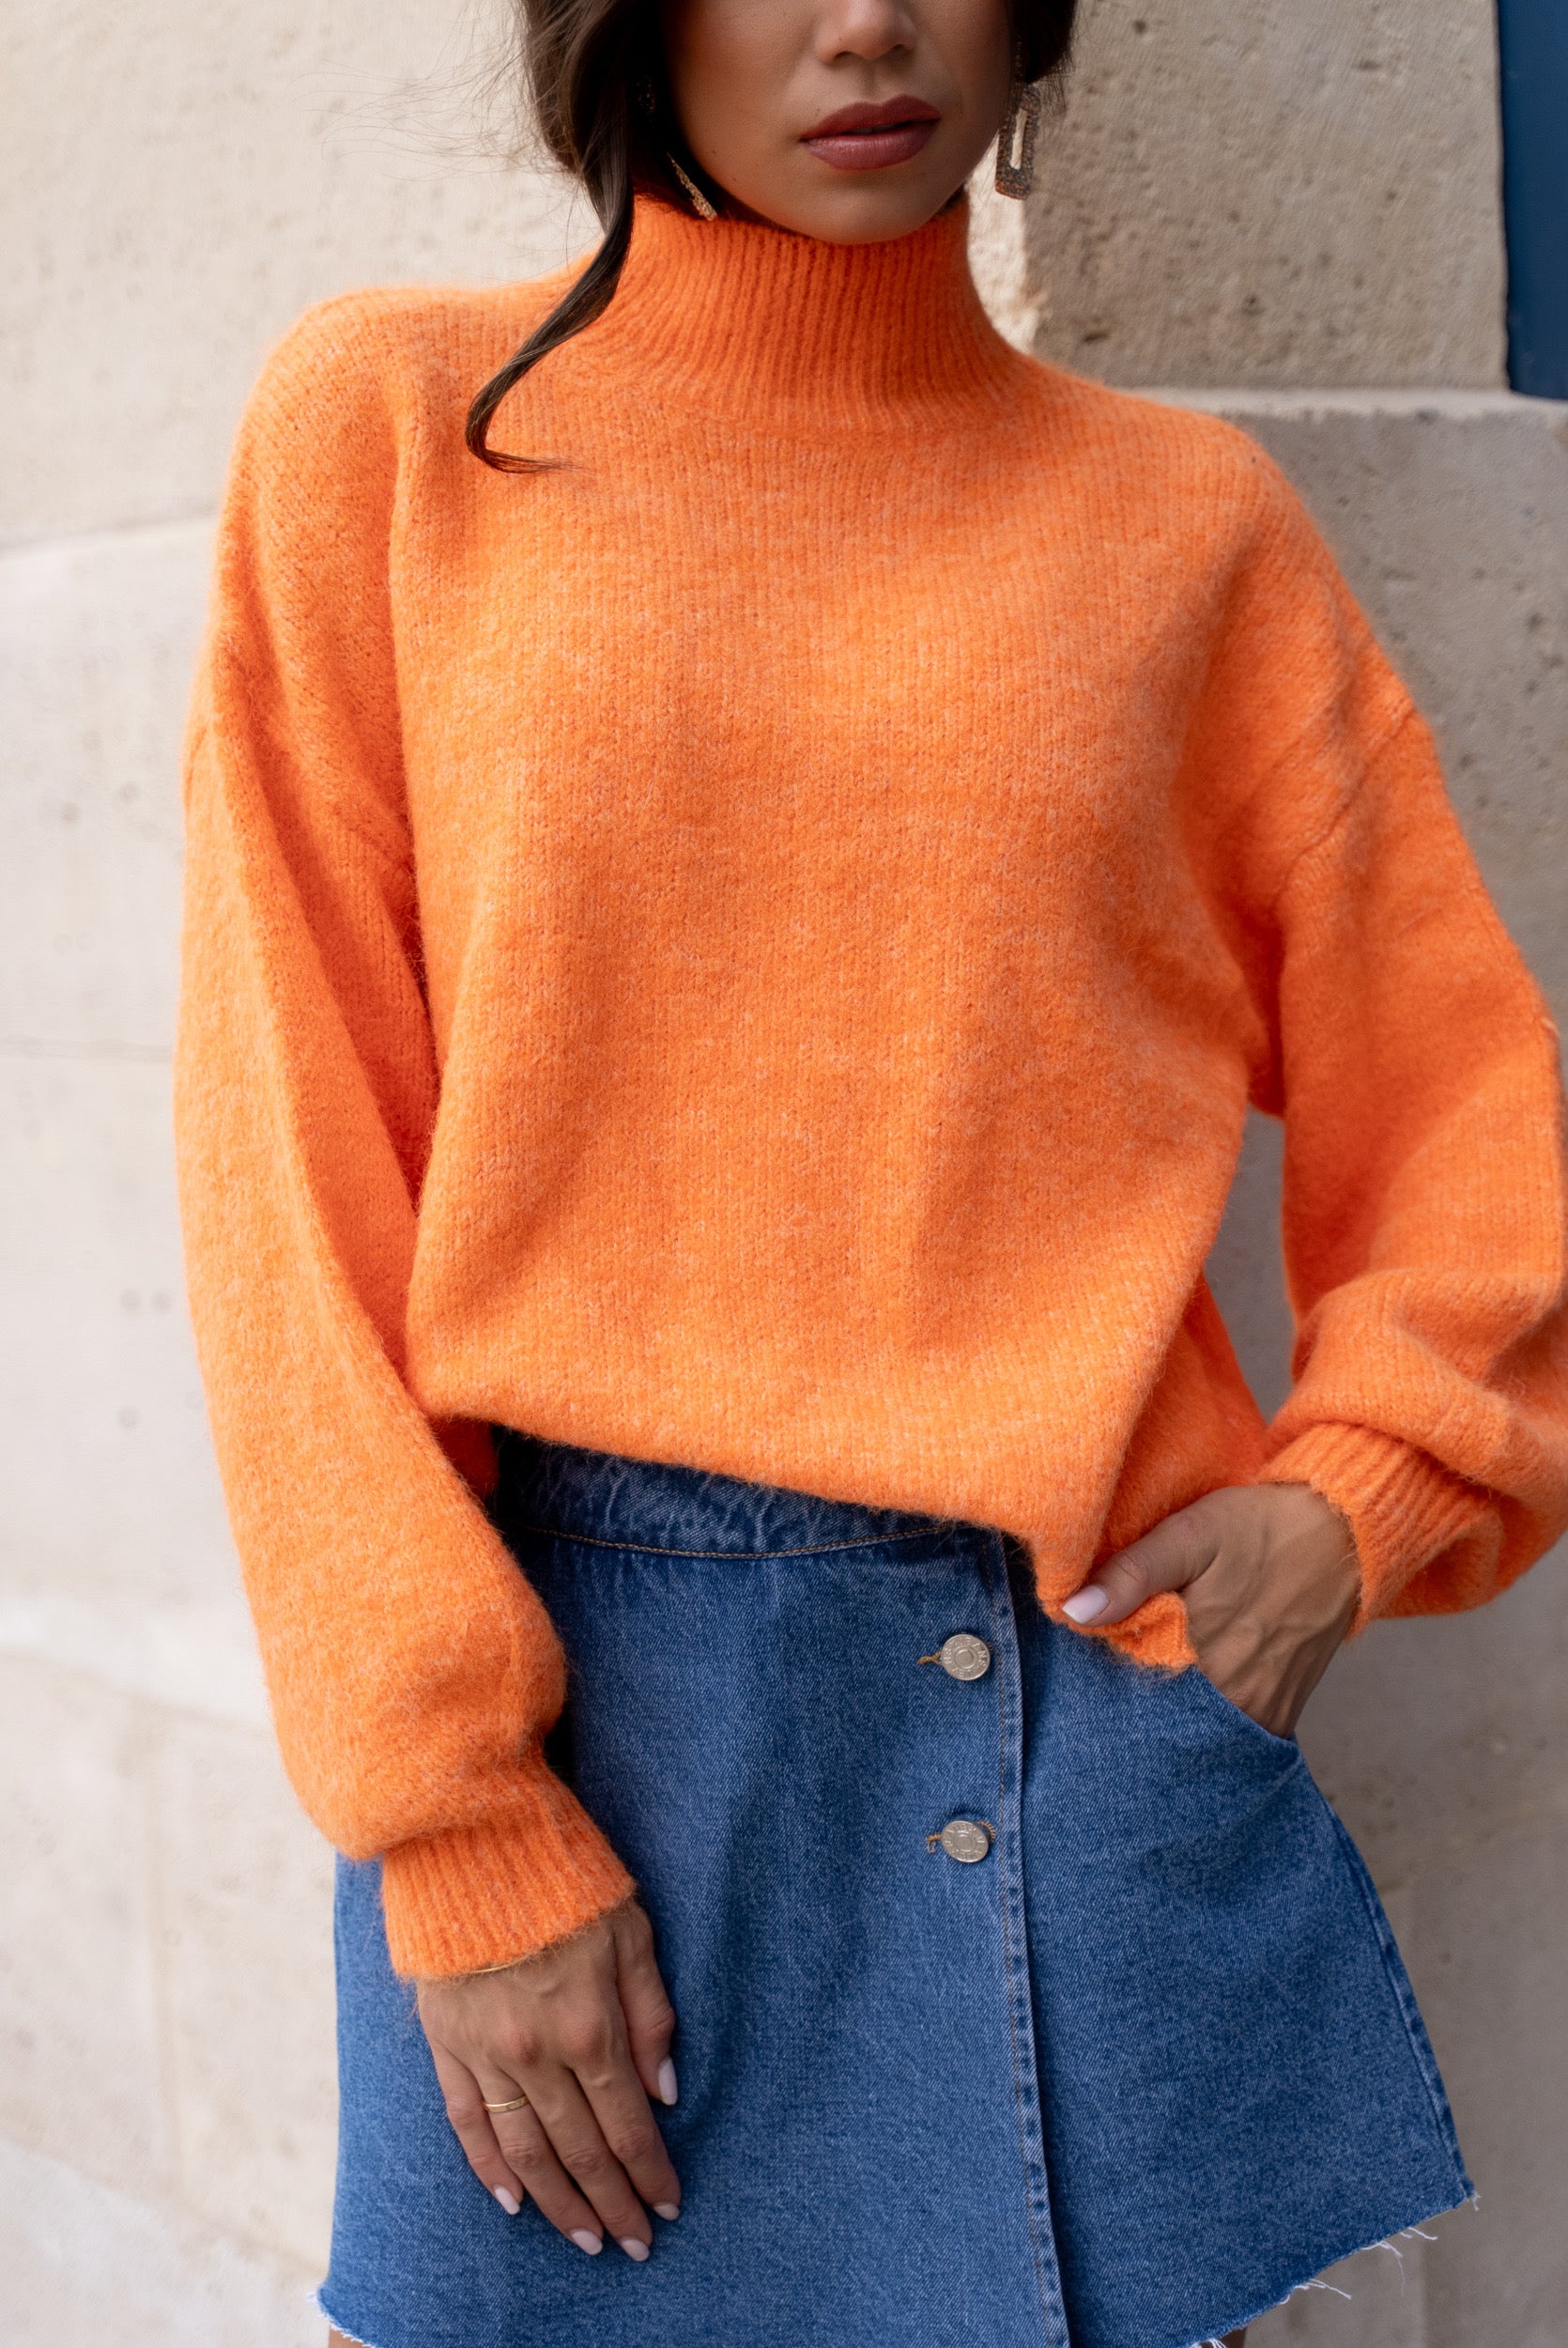 Orange sweater + flower sweater cropped m/l